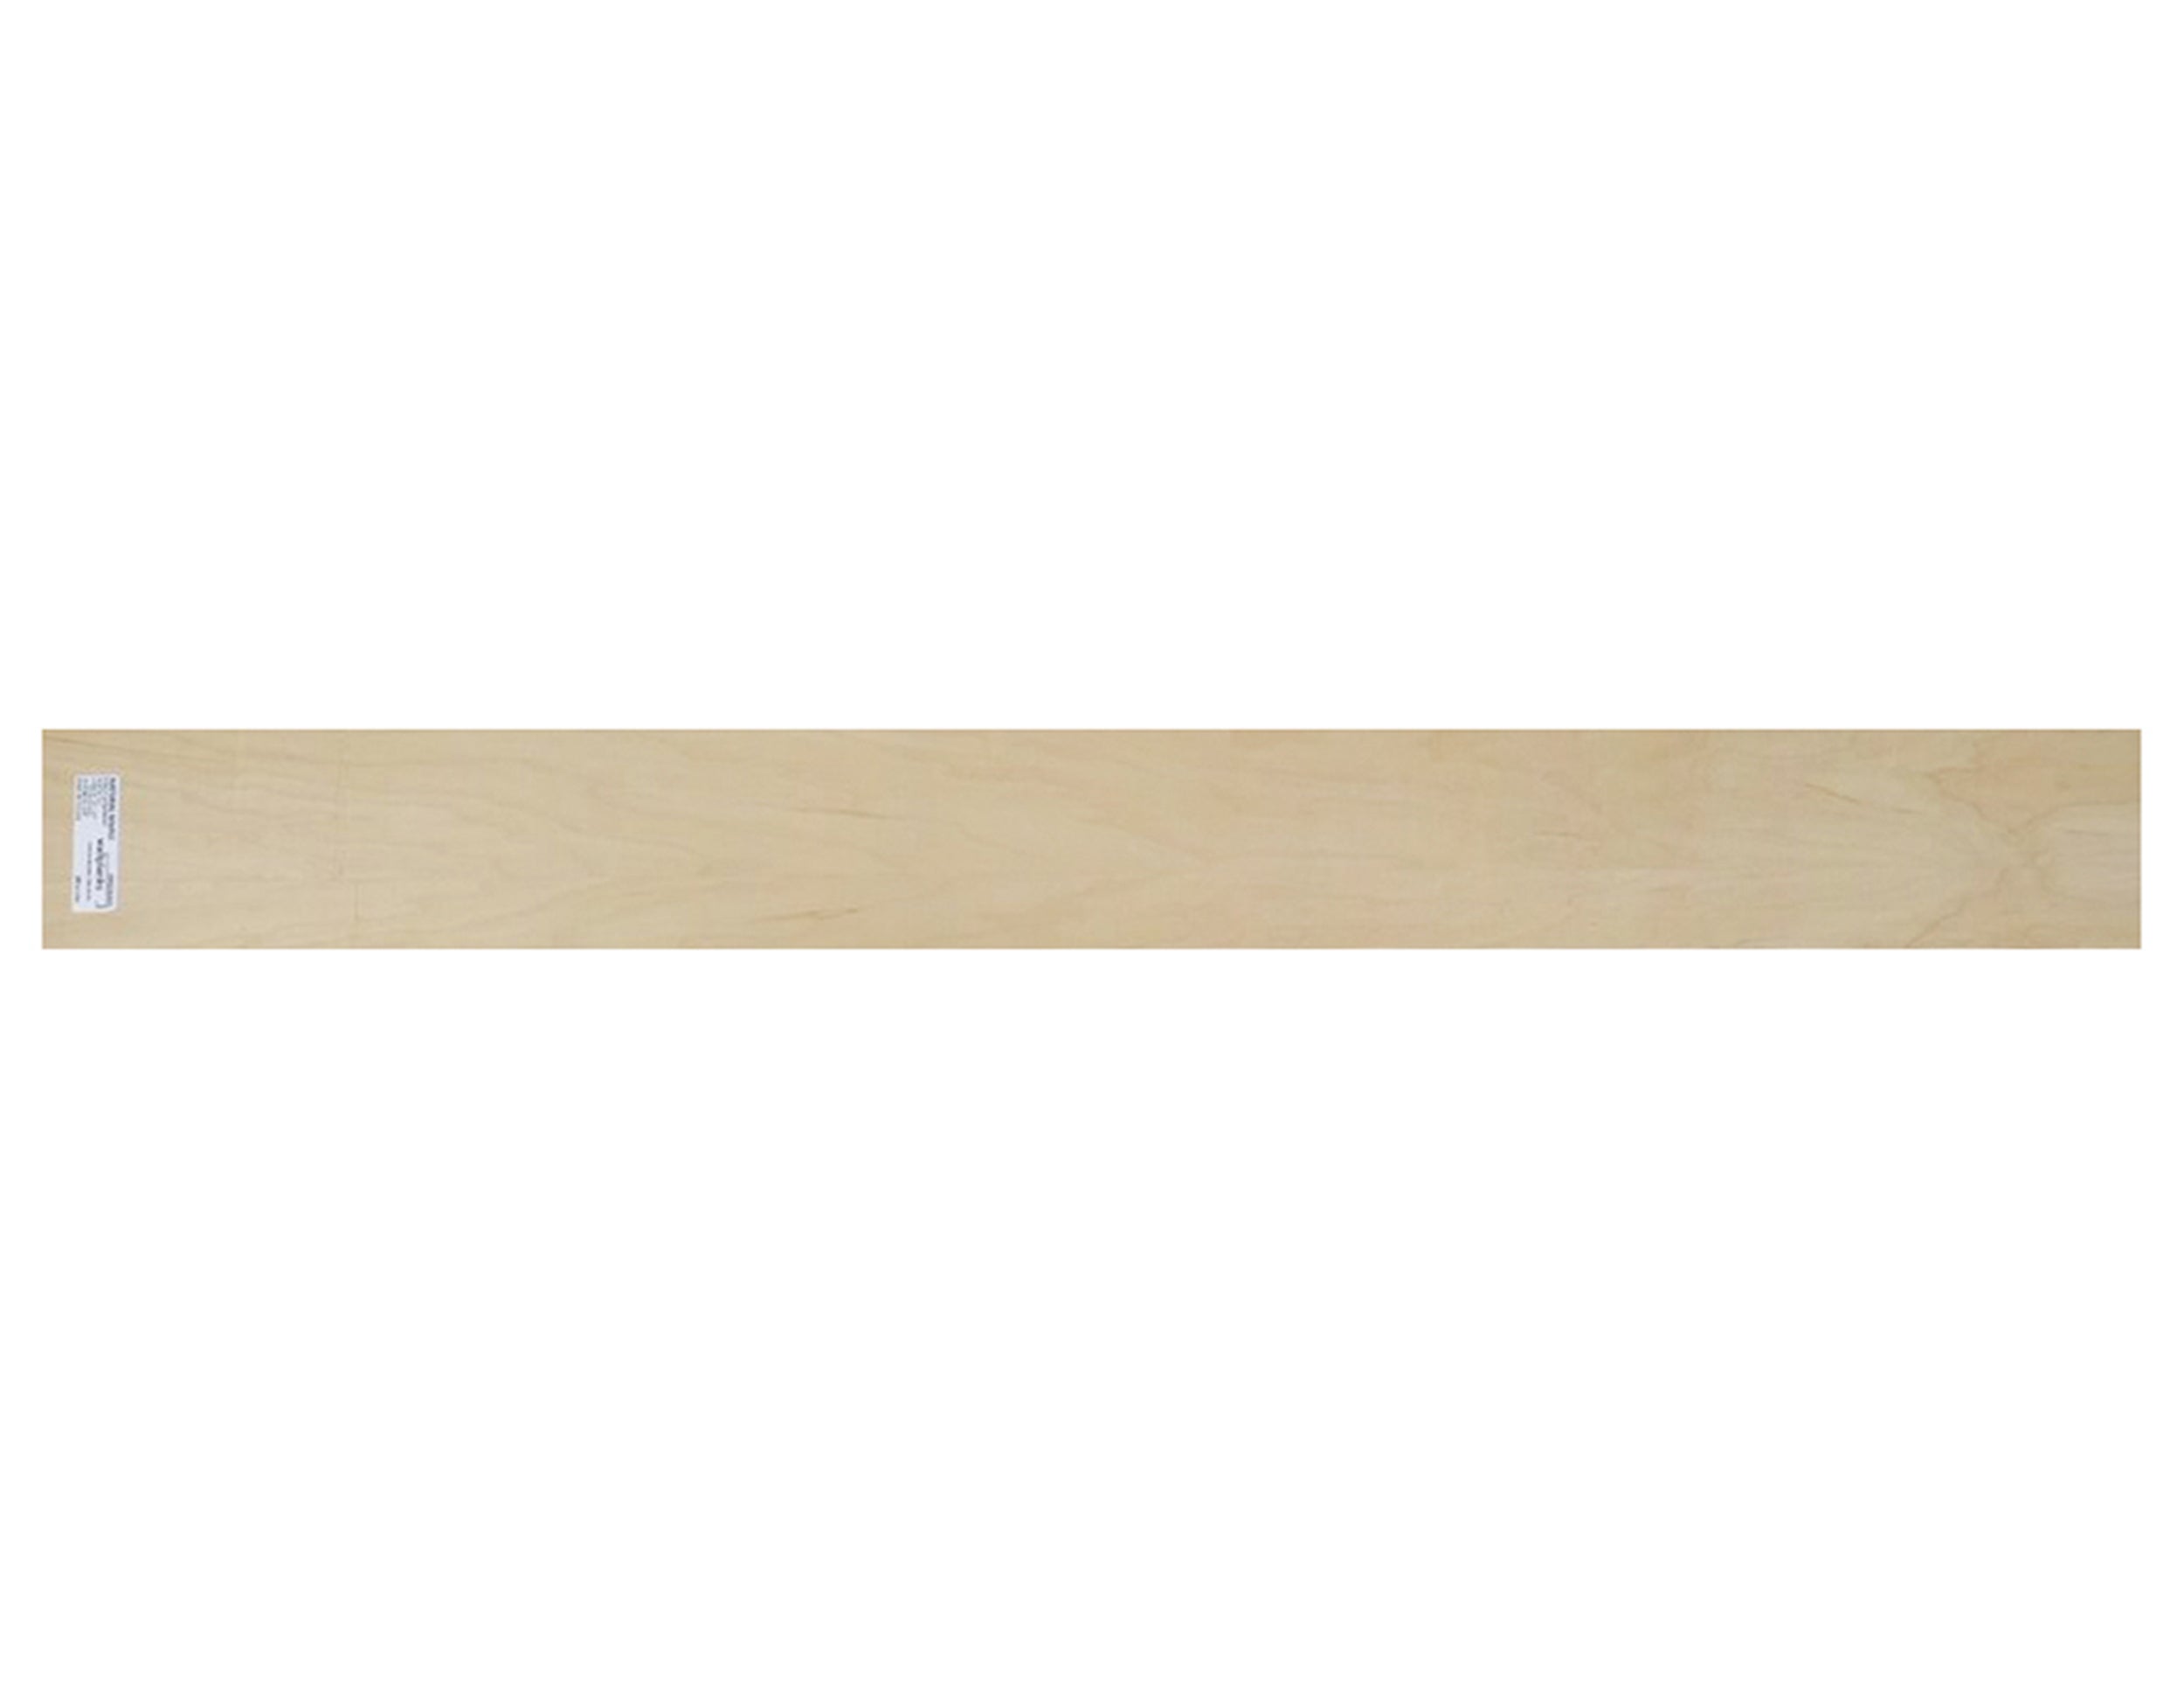 WP47X5MAMA Wallplanks Full Board Originals Hardwood Natural Maple Full Board: Originals Hardwood